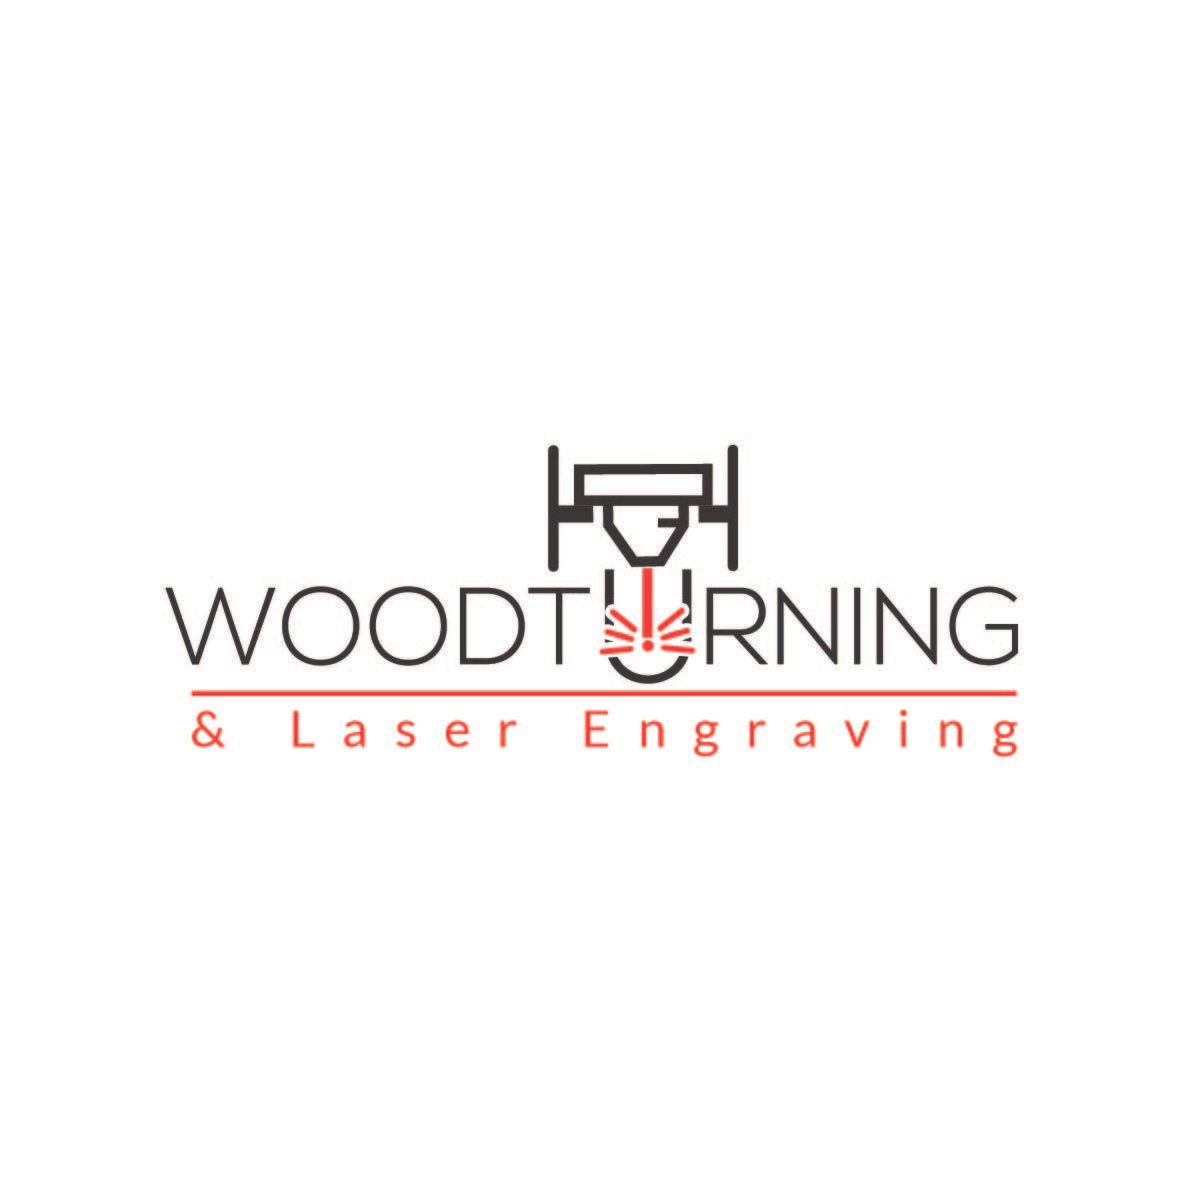 Engraving Logo - Playful, Colorful Logo Design for Woodturning & Laser Engraving by ...